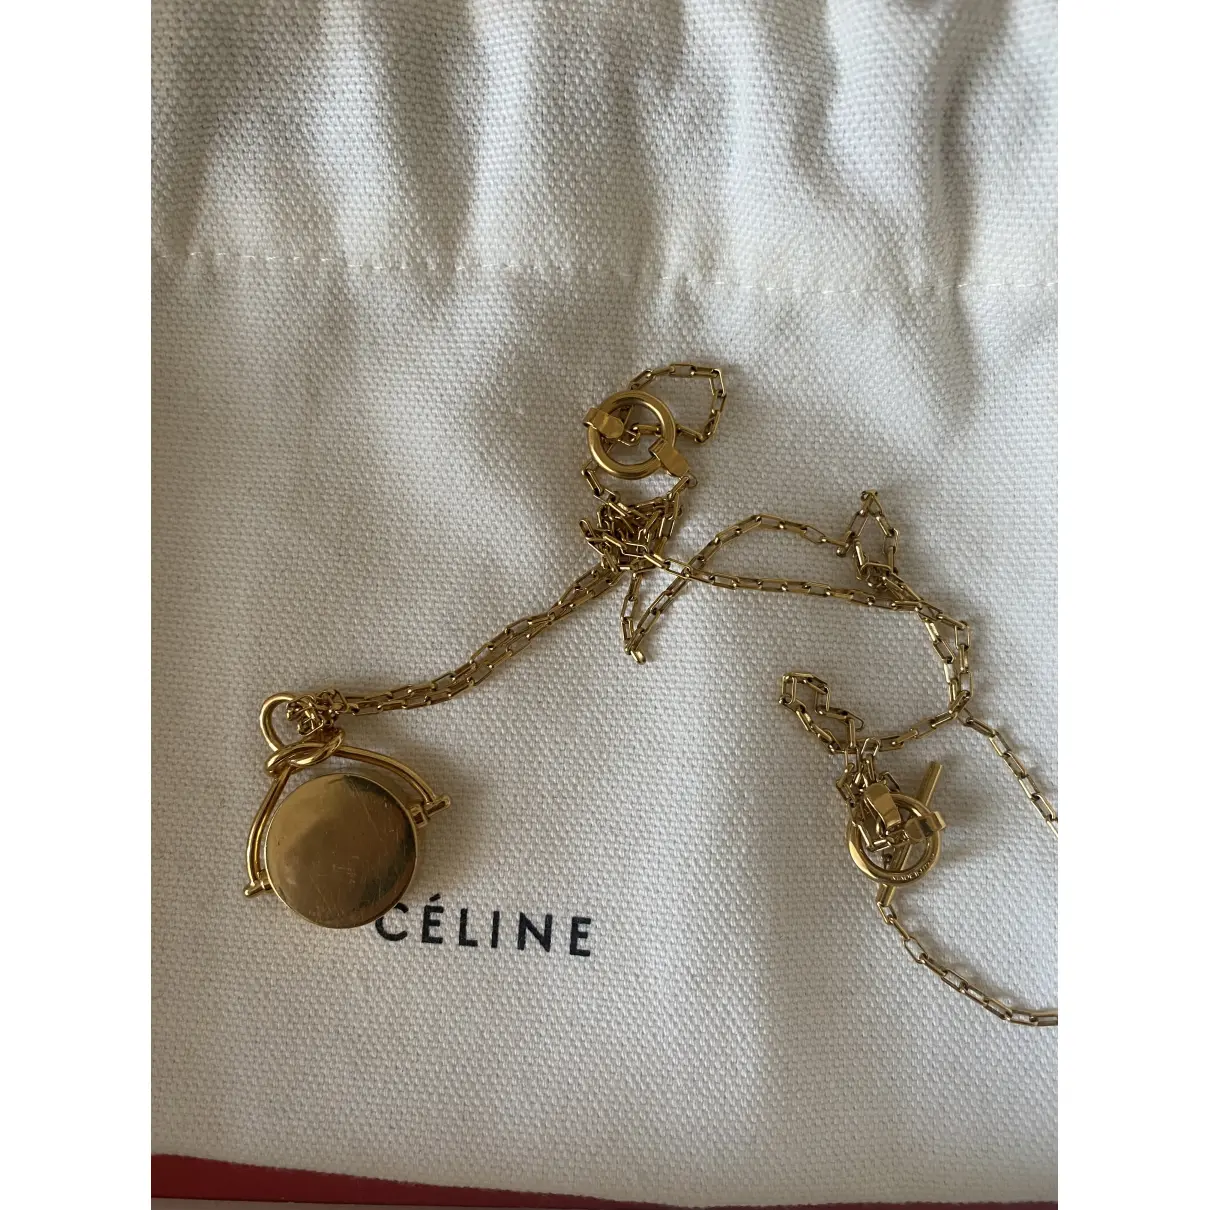 Buy Celine Necklace online